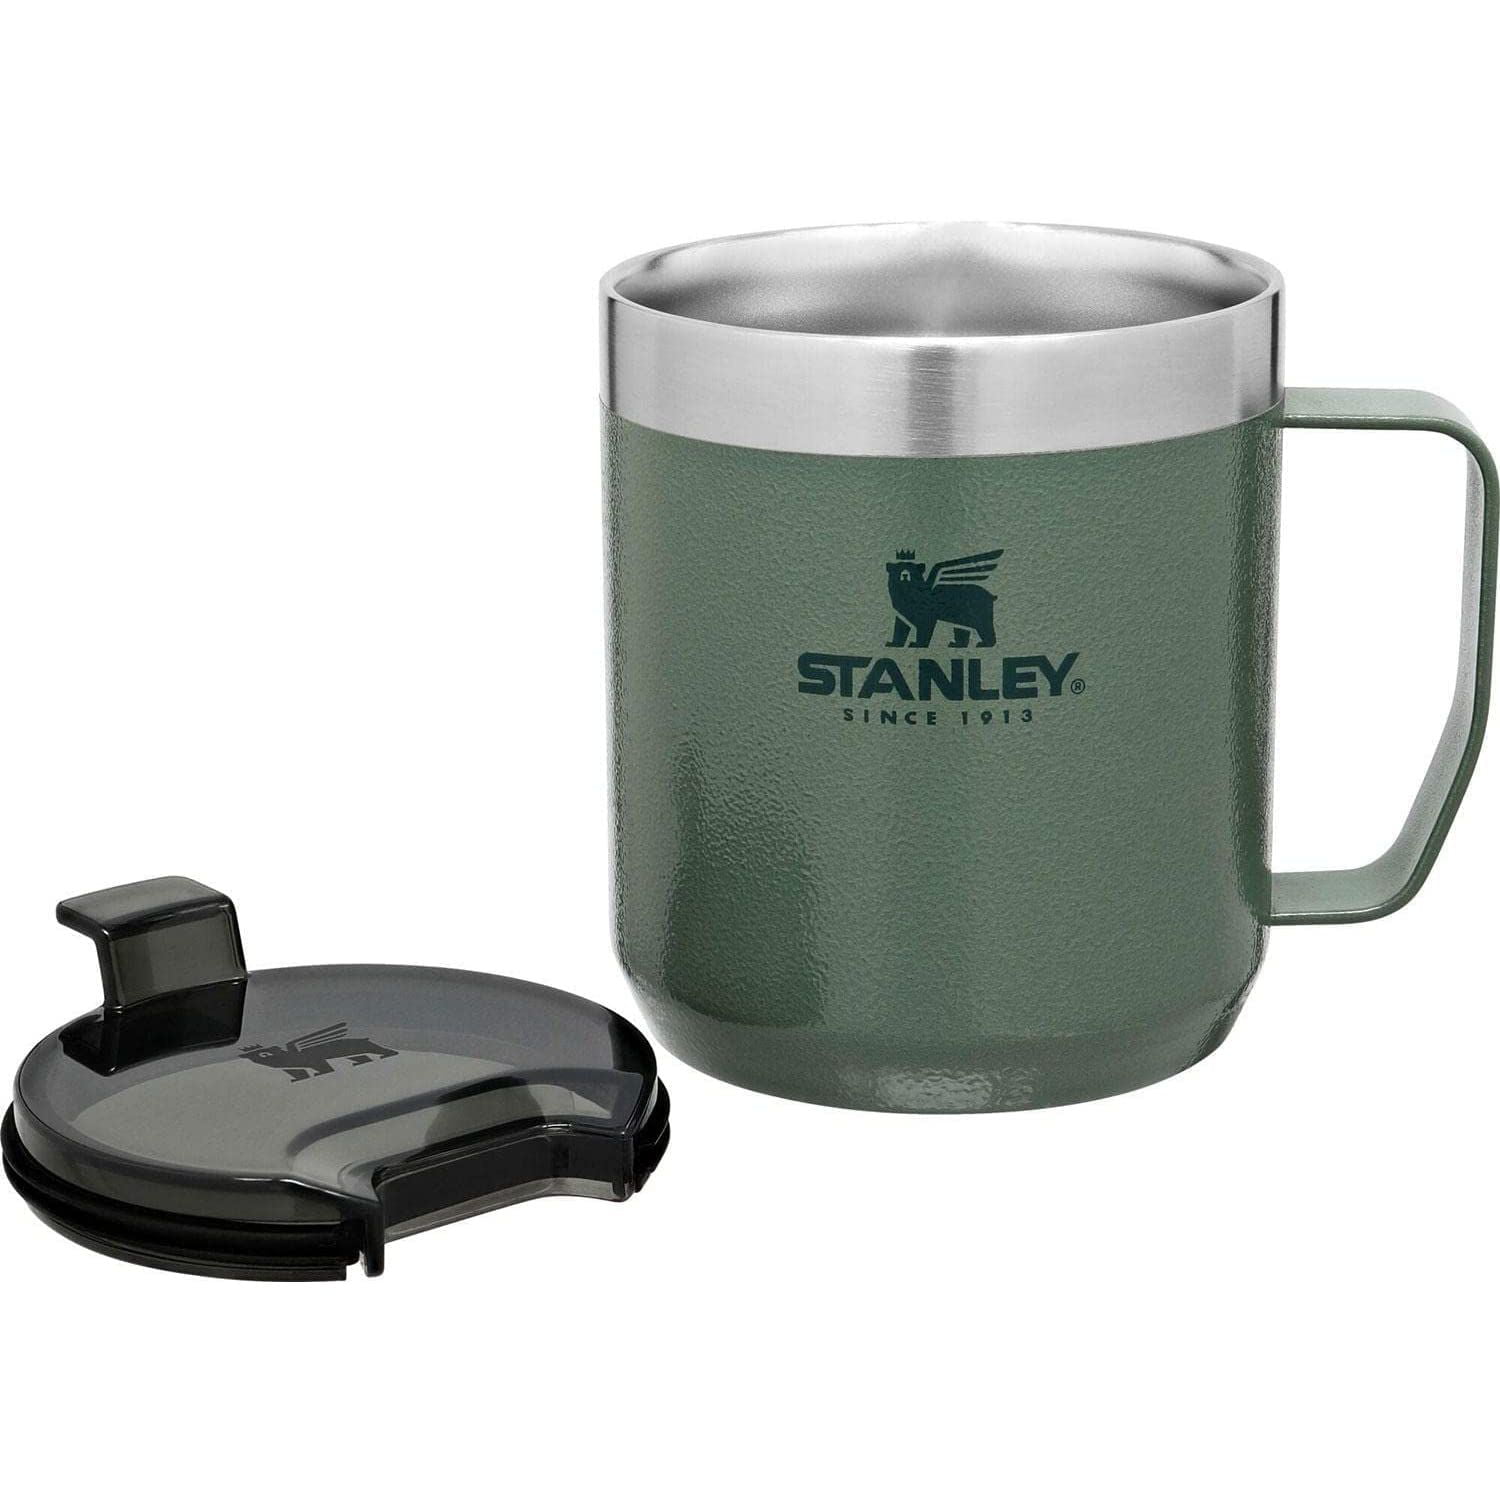 Stanley 12 oz. Stainless Steel Camp Mug, 2 Pack, Hammertone Green/Matte  Black